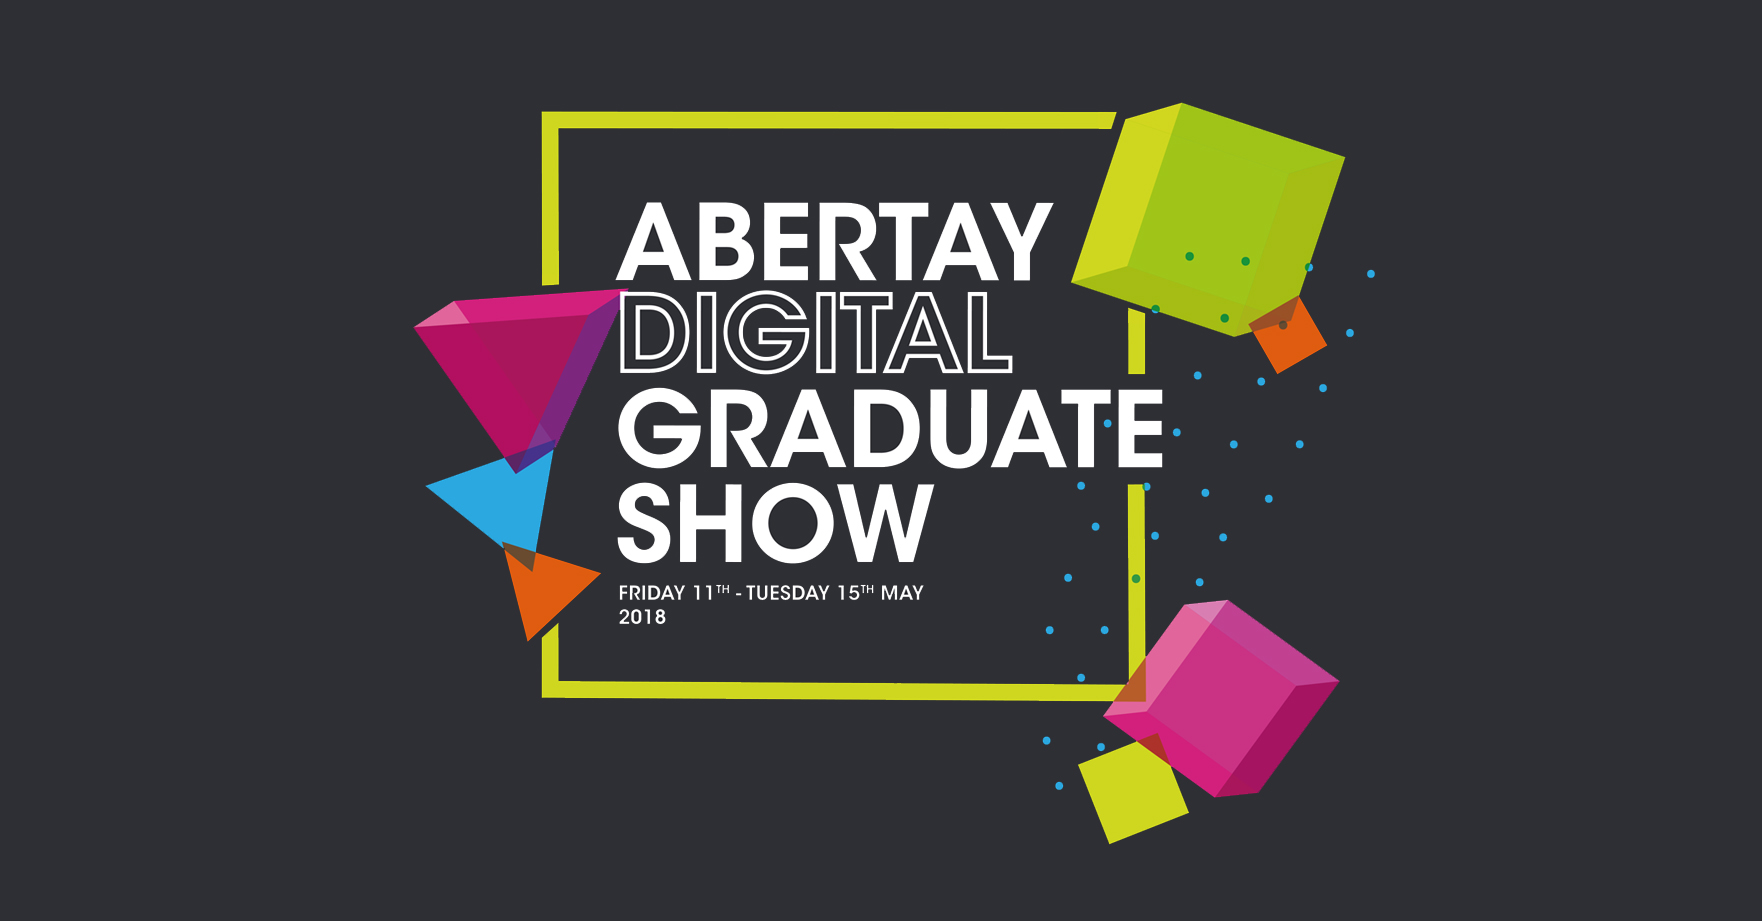 Abertay Digital Graduate Show goes live!